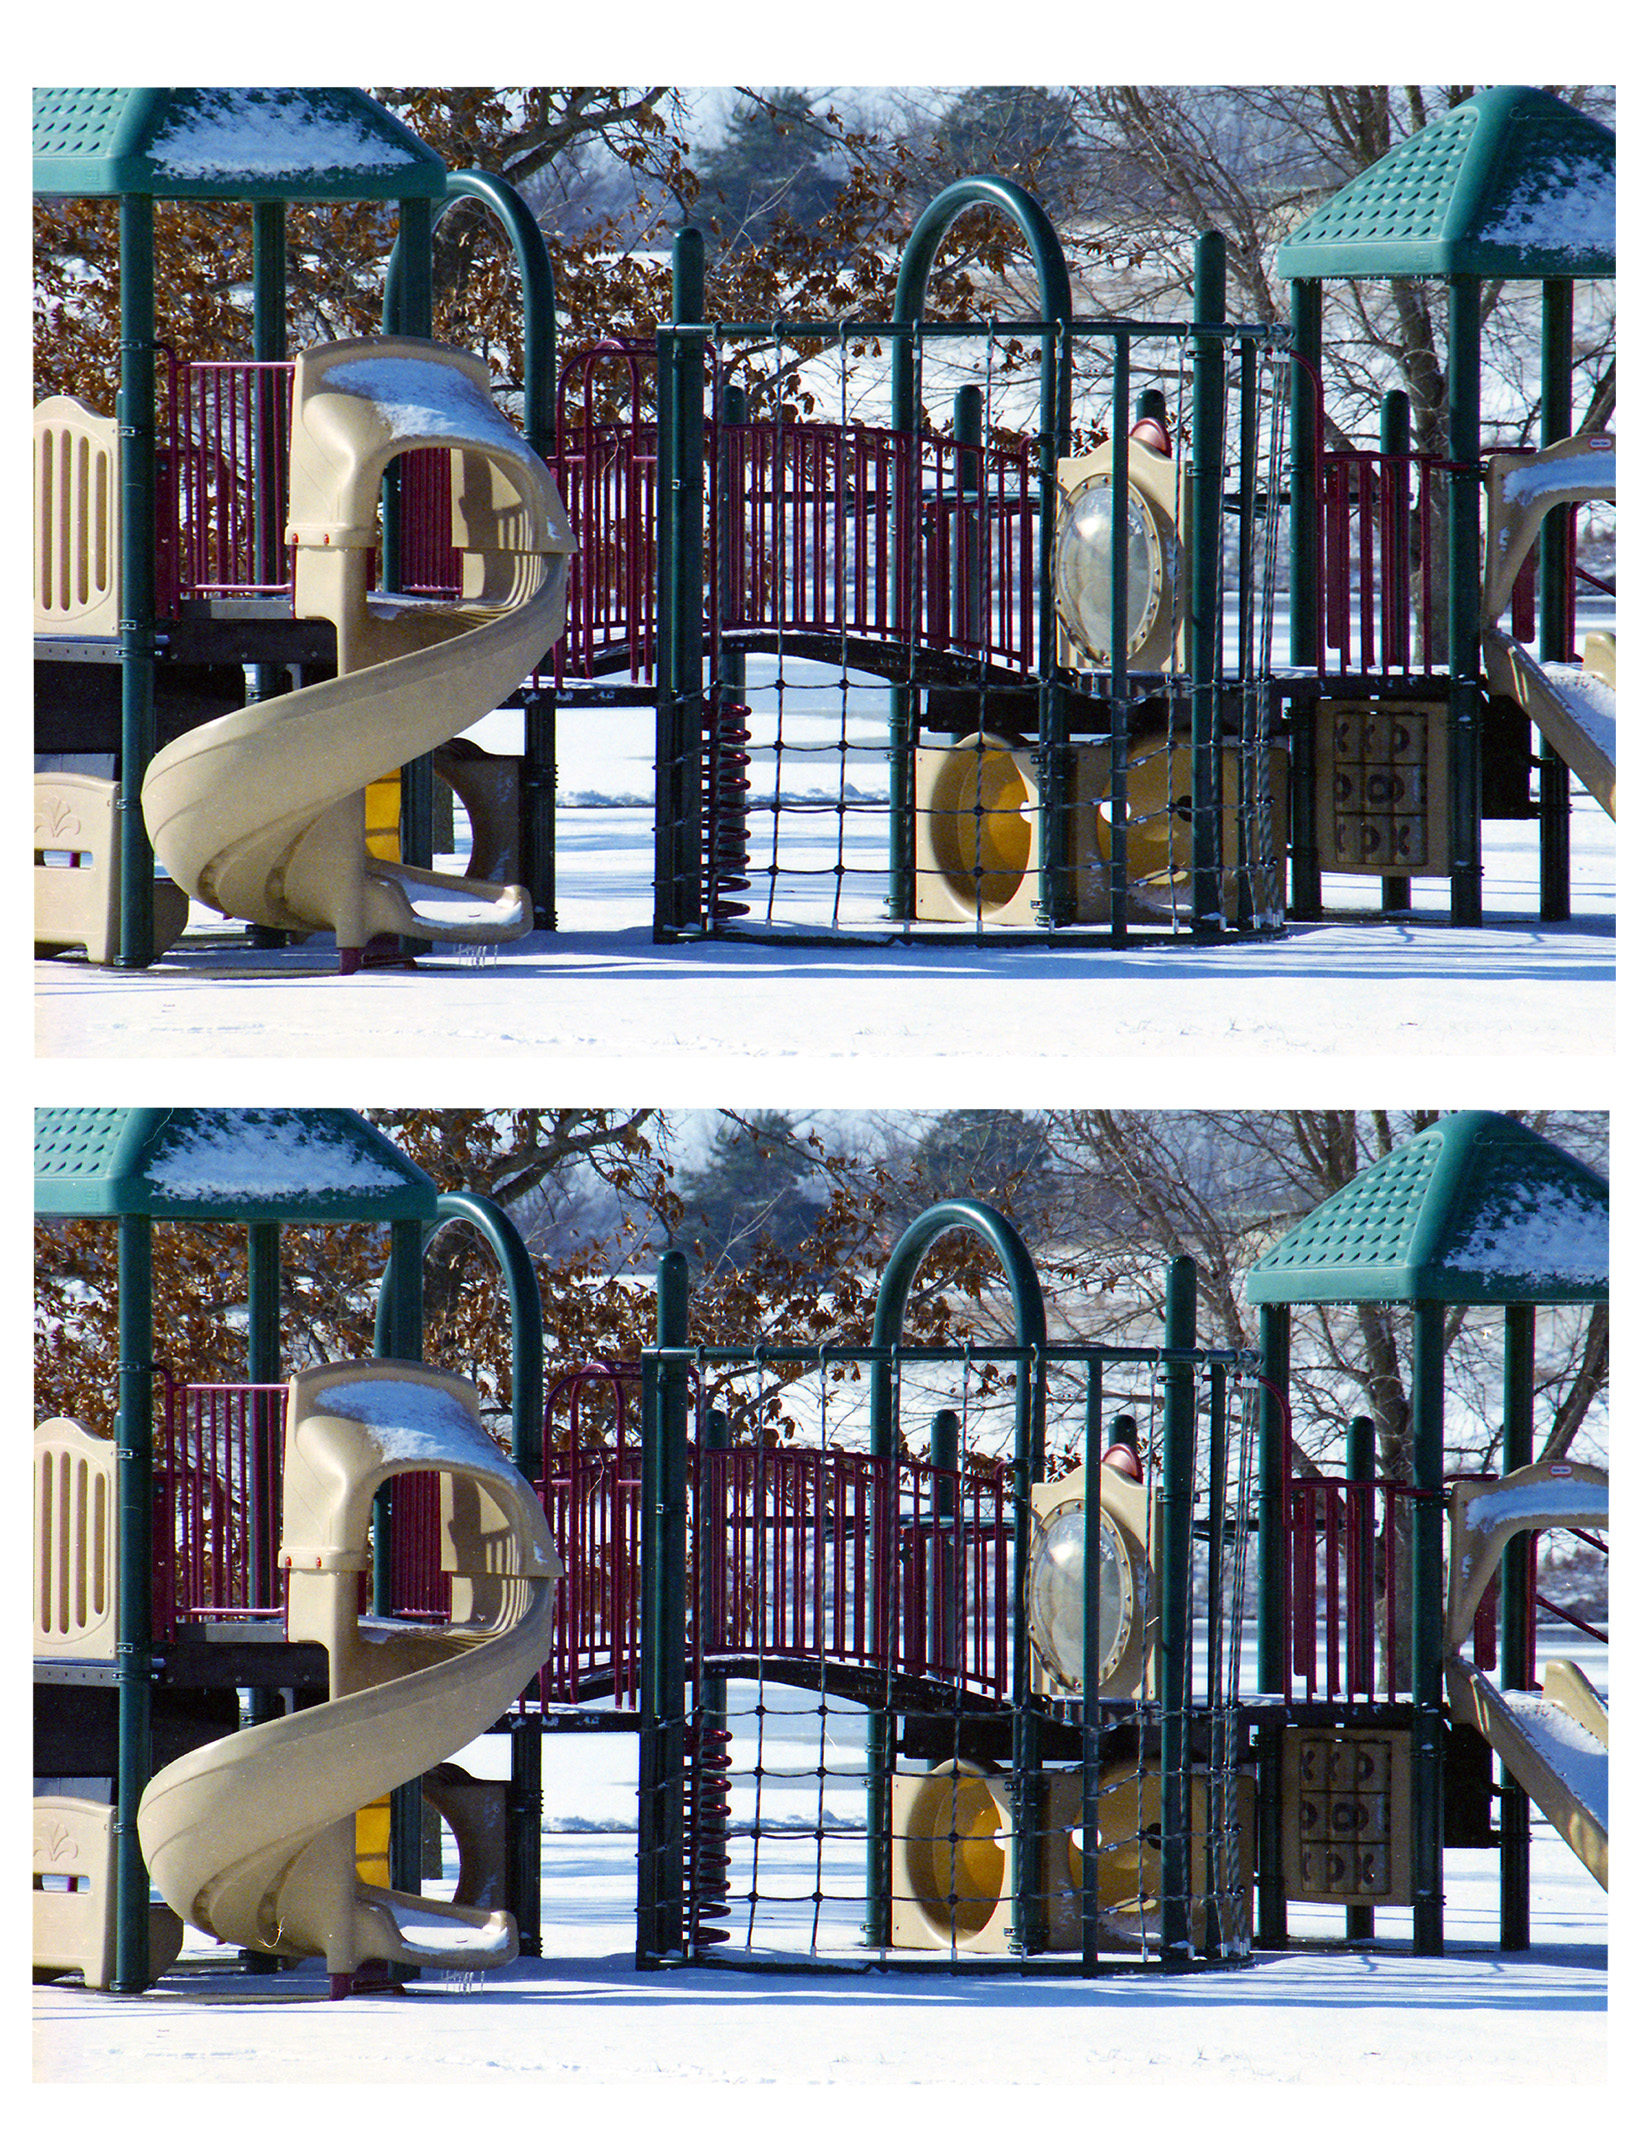 playground set film vs dslr 2.jpg